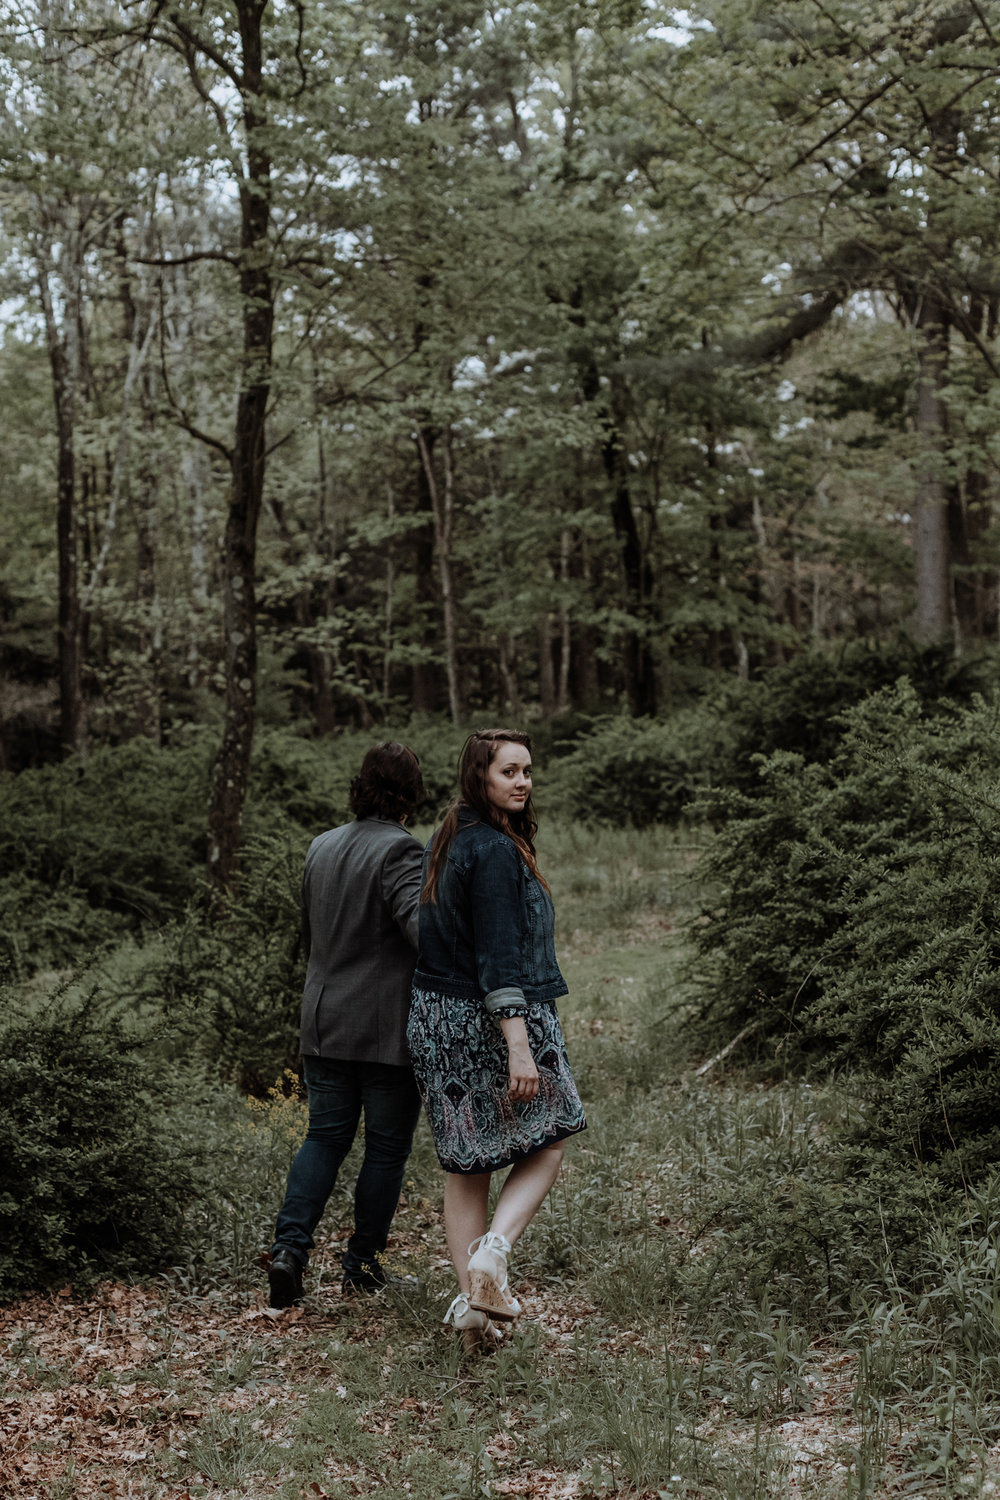 saylorsburg-walking-in-woods-couple-portrait